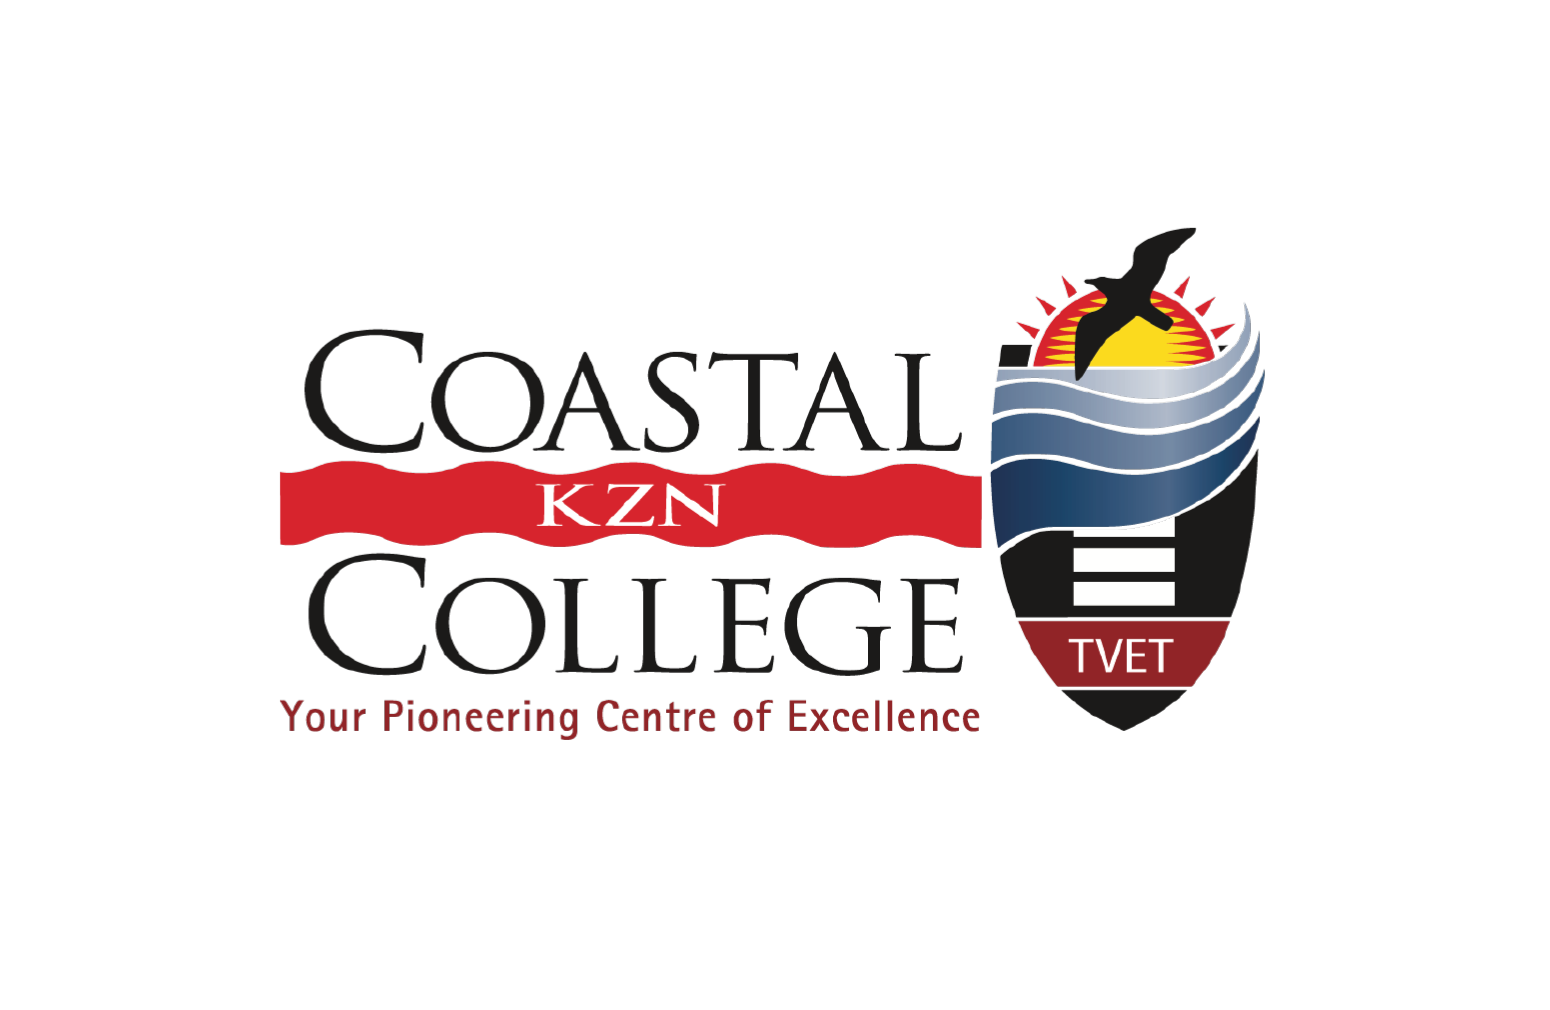 Coastal_KZN_College